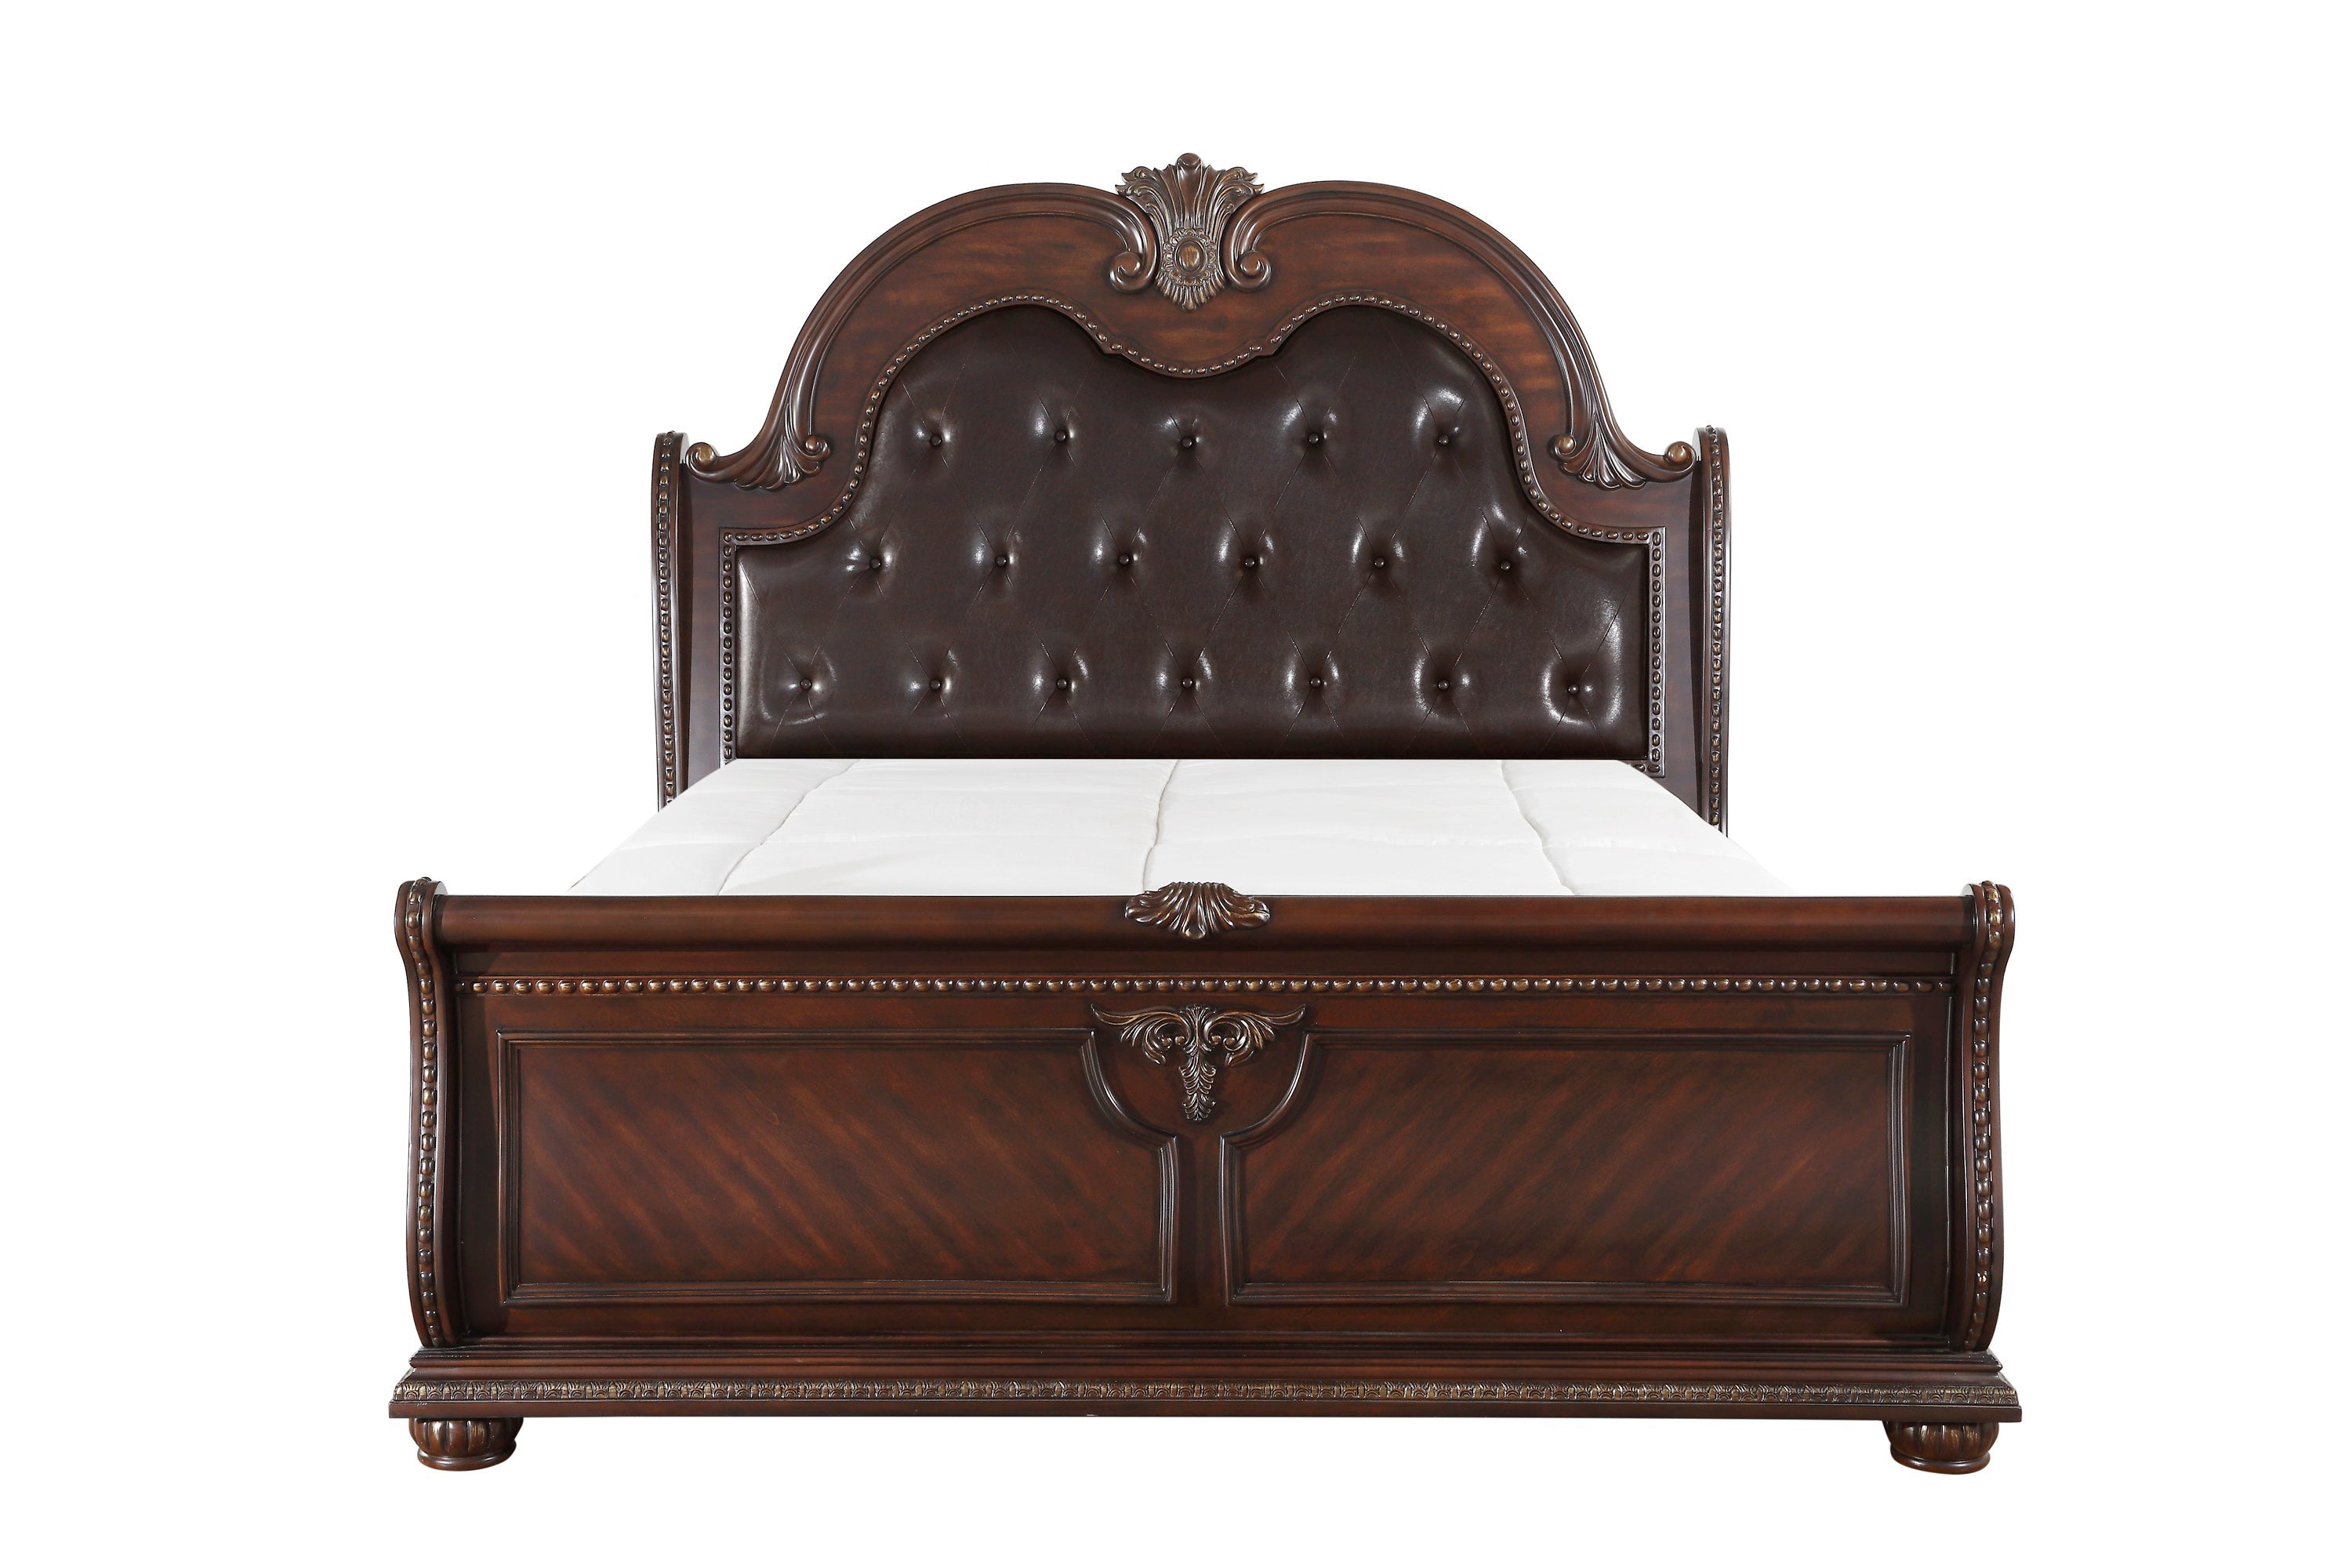 Cavalier Dark Cherry Upholstered Sleigh Bedroom Set - SET | 1757-1 | 1757-2 | 1757-3 | 1757-1P | 1757-4 | 1757-9 - Bien Home Furniture &amp; Electronics